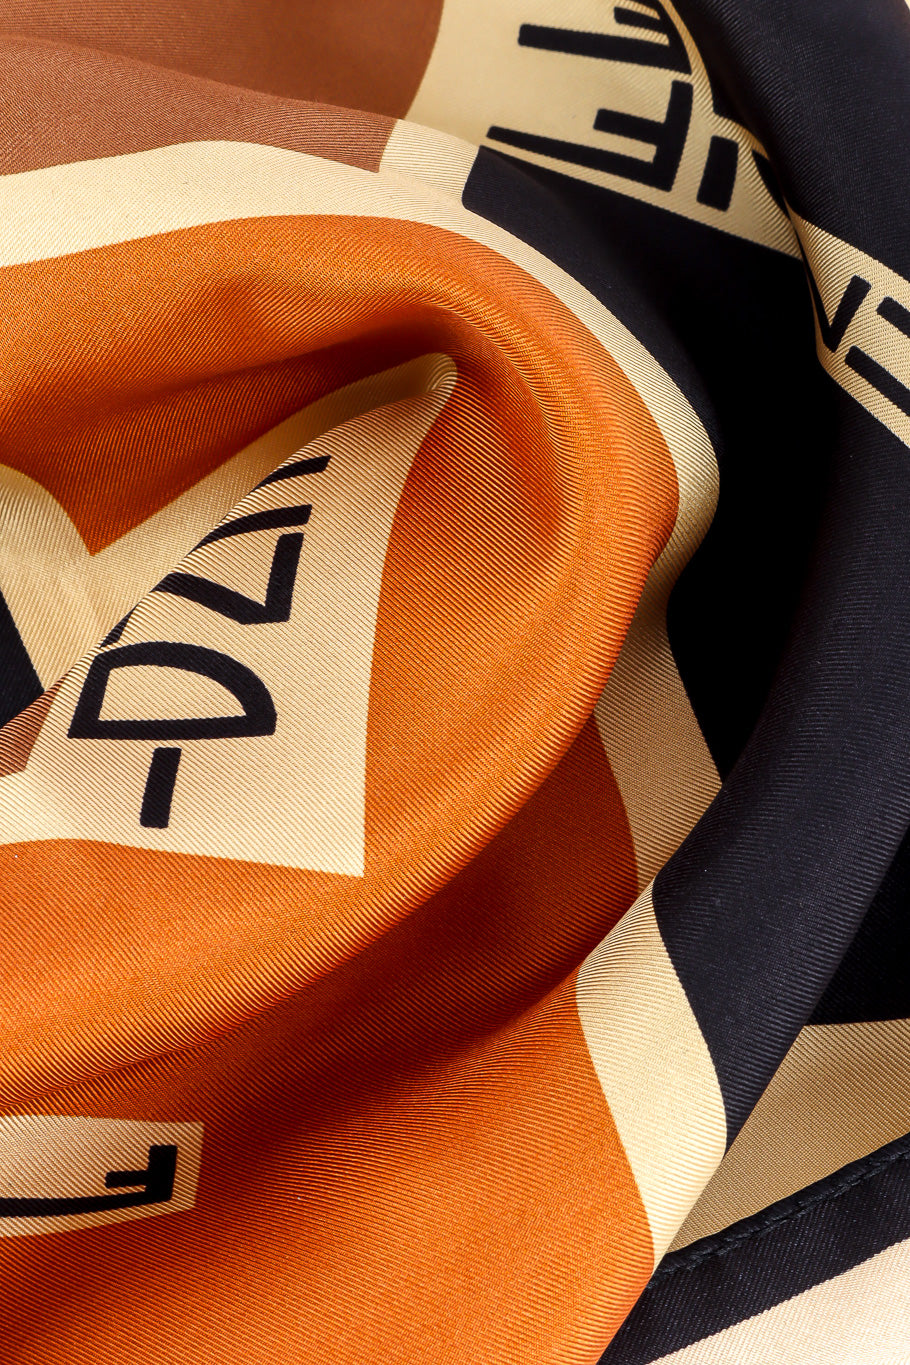 Retro print graphic scarf by Fendi Photo fabric close-up. @recessla